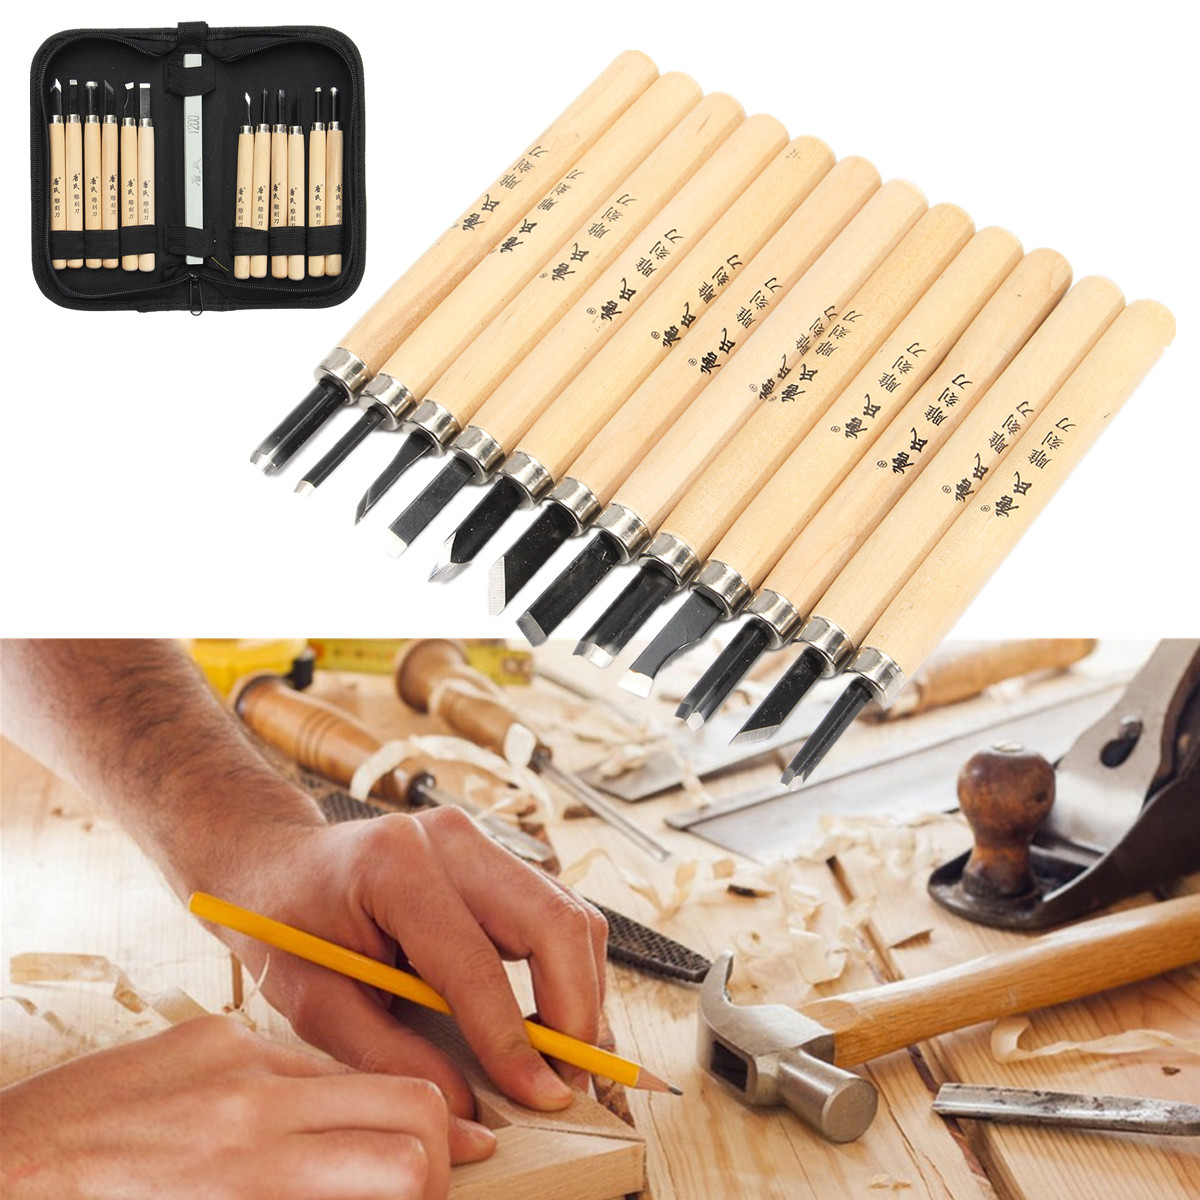 

12Pcs Wood Carving Hand Chisel Tool Set Wood Working Professional Gouges + Case